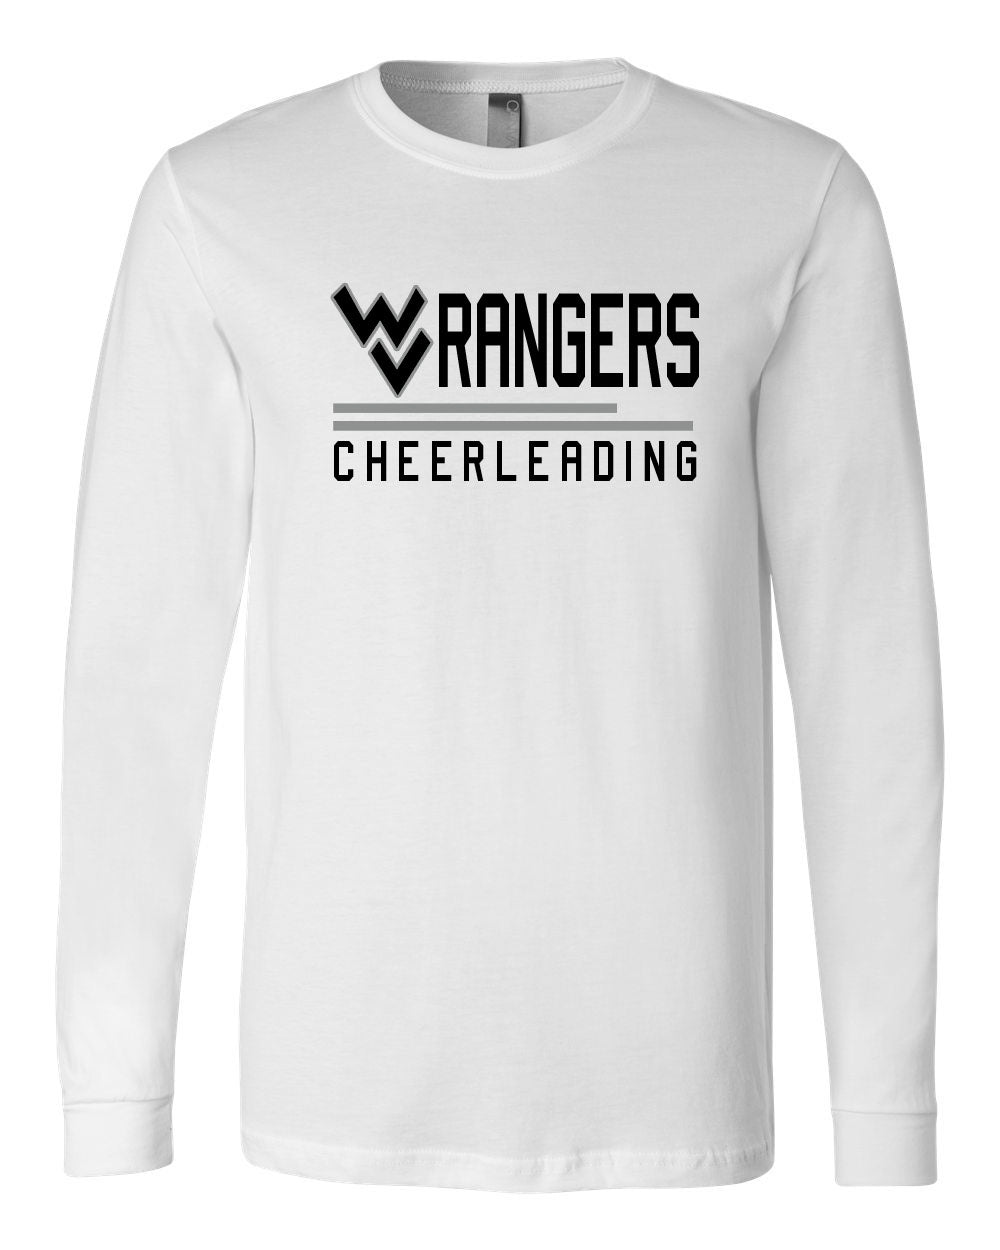 Wallkill Cheer Design 2 Long Sleeve Shirt